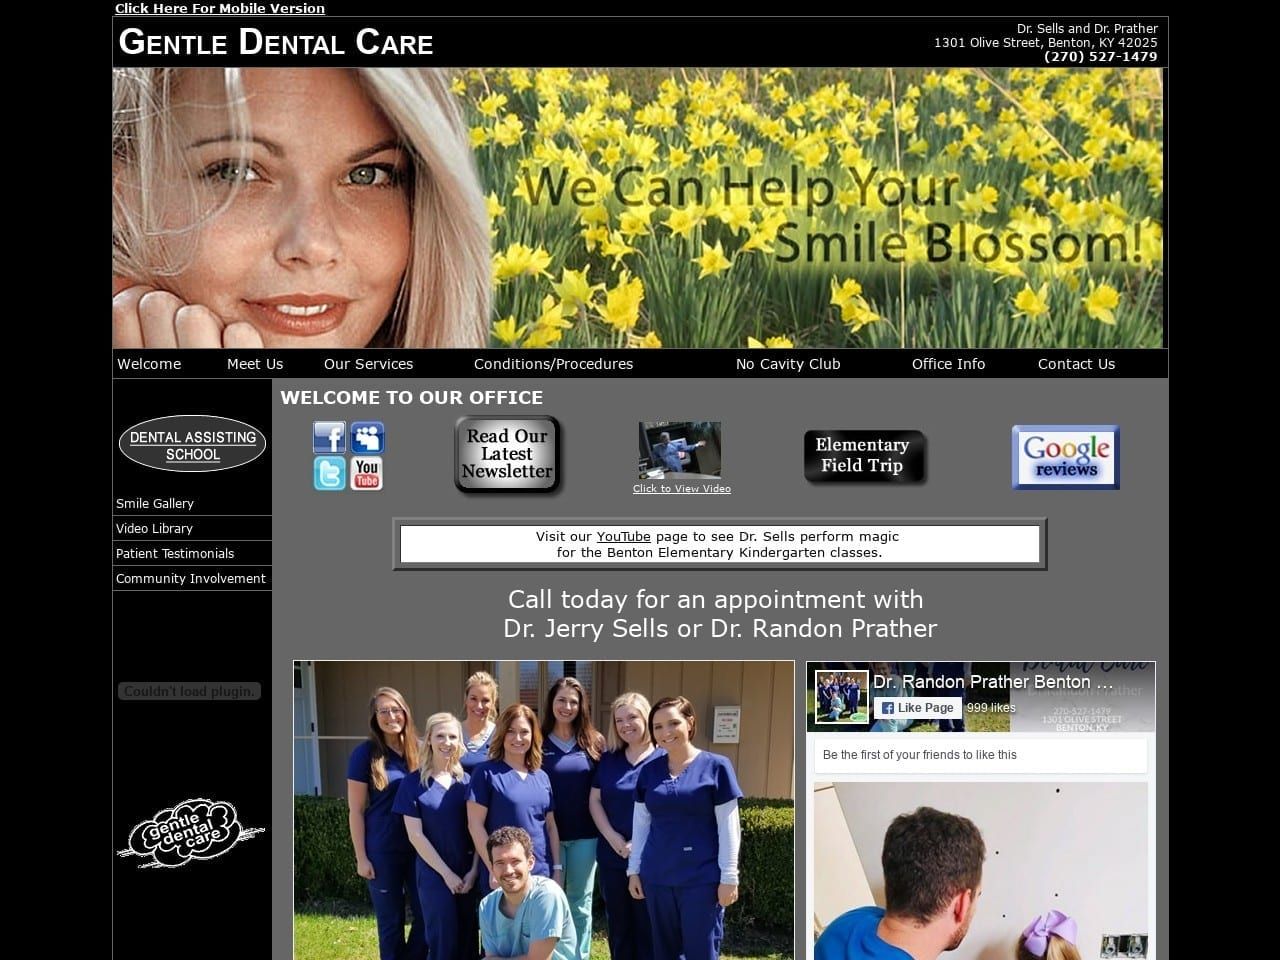 Dr. Randon Prather Website Screenshot from bentondentist.com